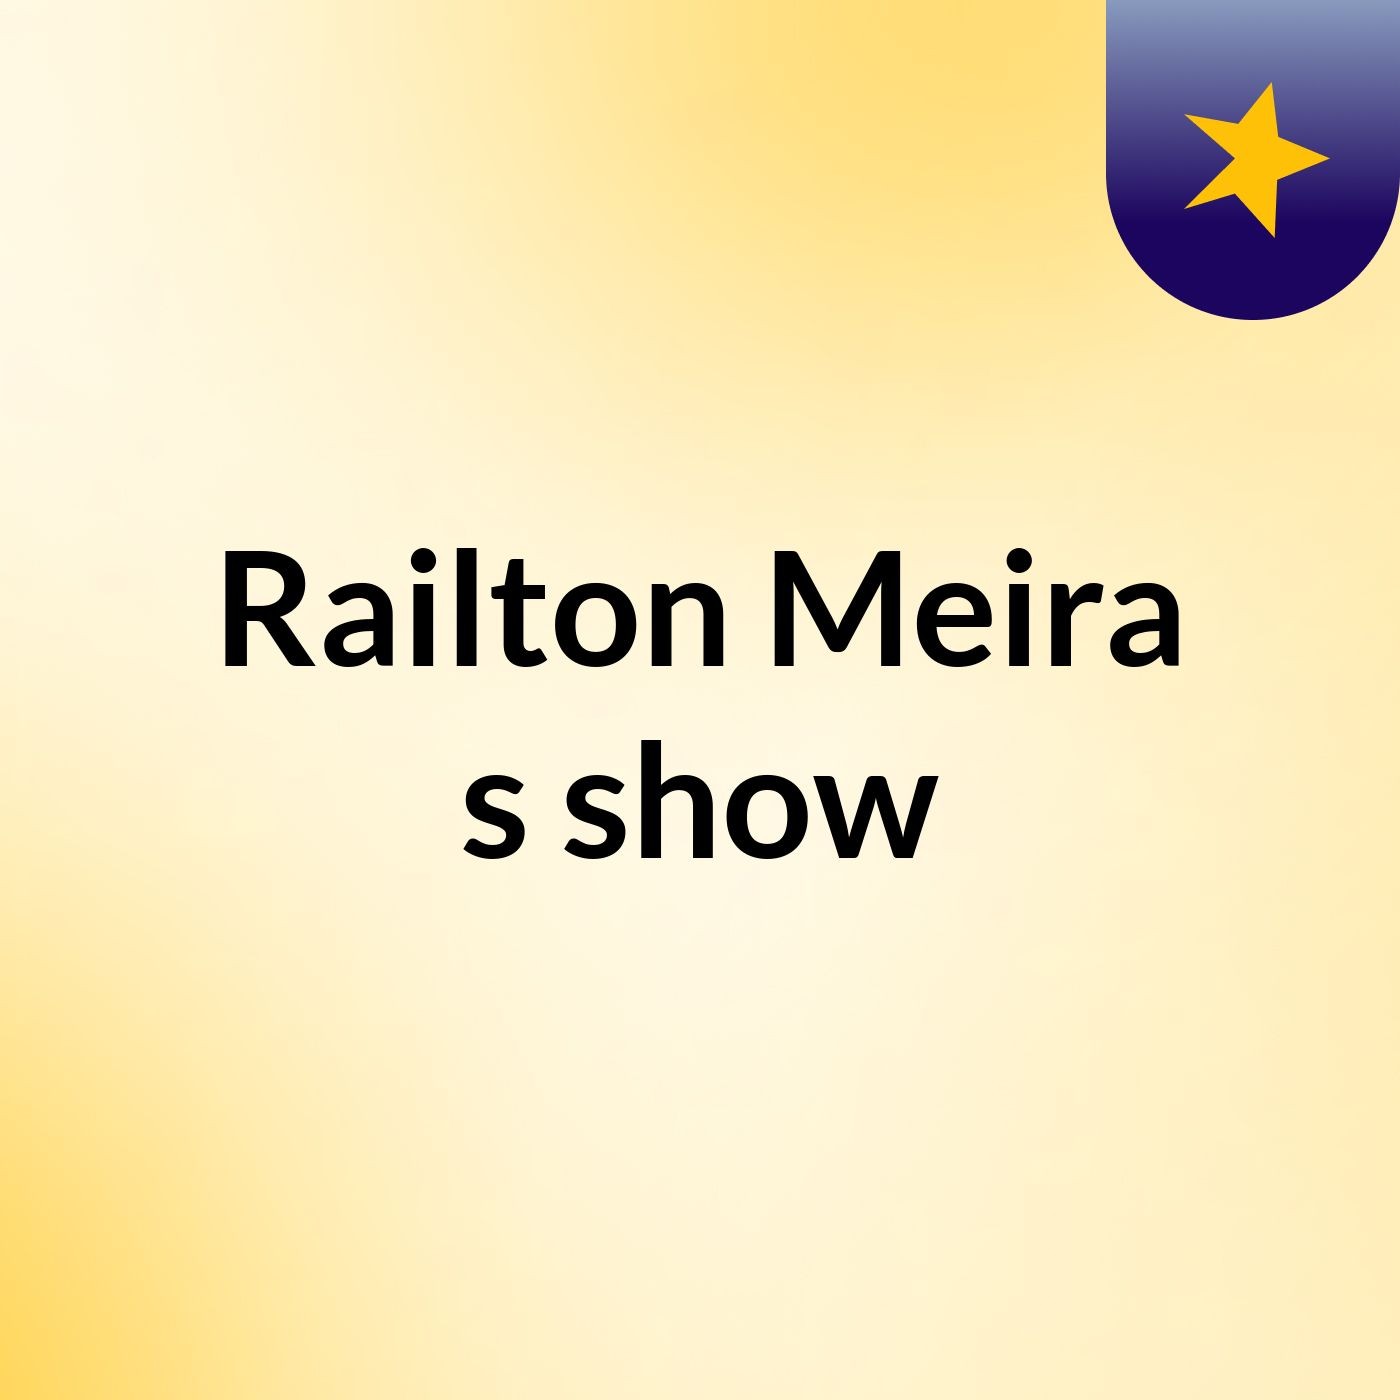 Railton Meira's show